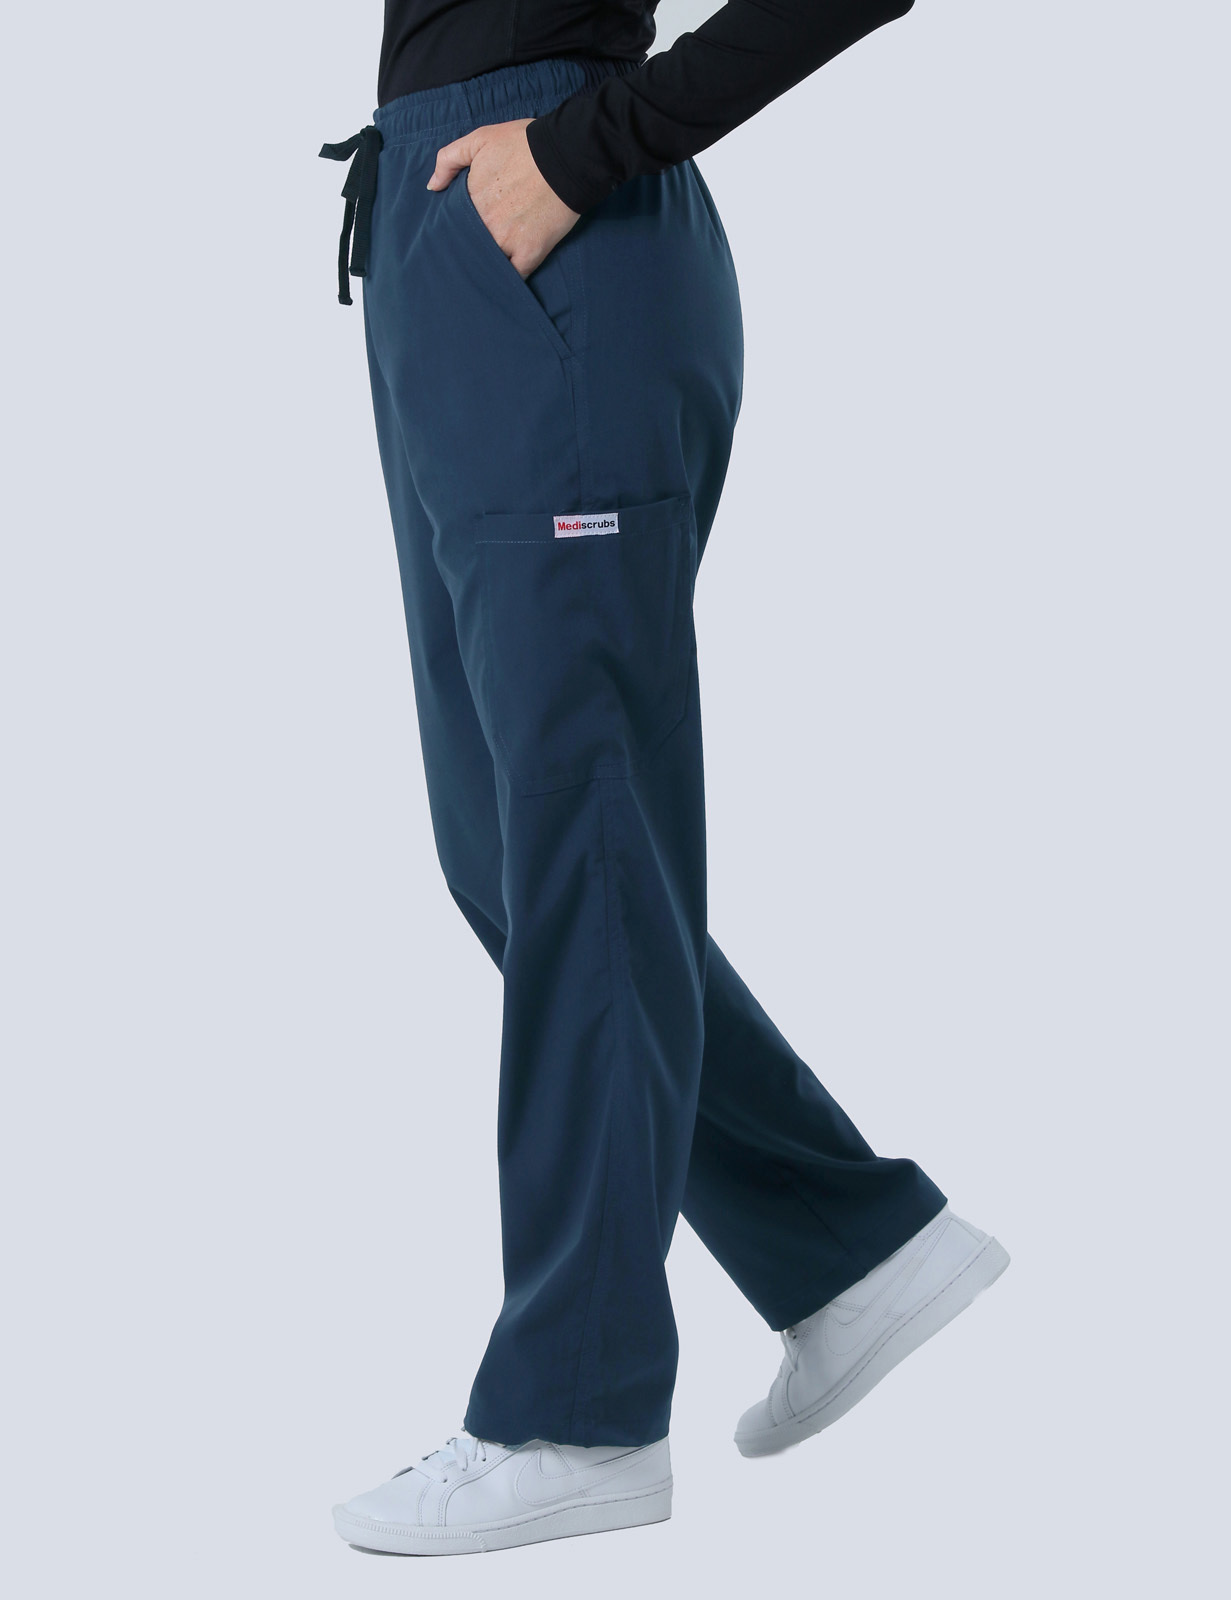 Royal Melbourne Hospital Dermatology Department Uniform Set Bndle (4 Pocket Top and Cargo Pants in Navy + Logos)